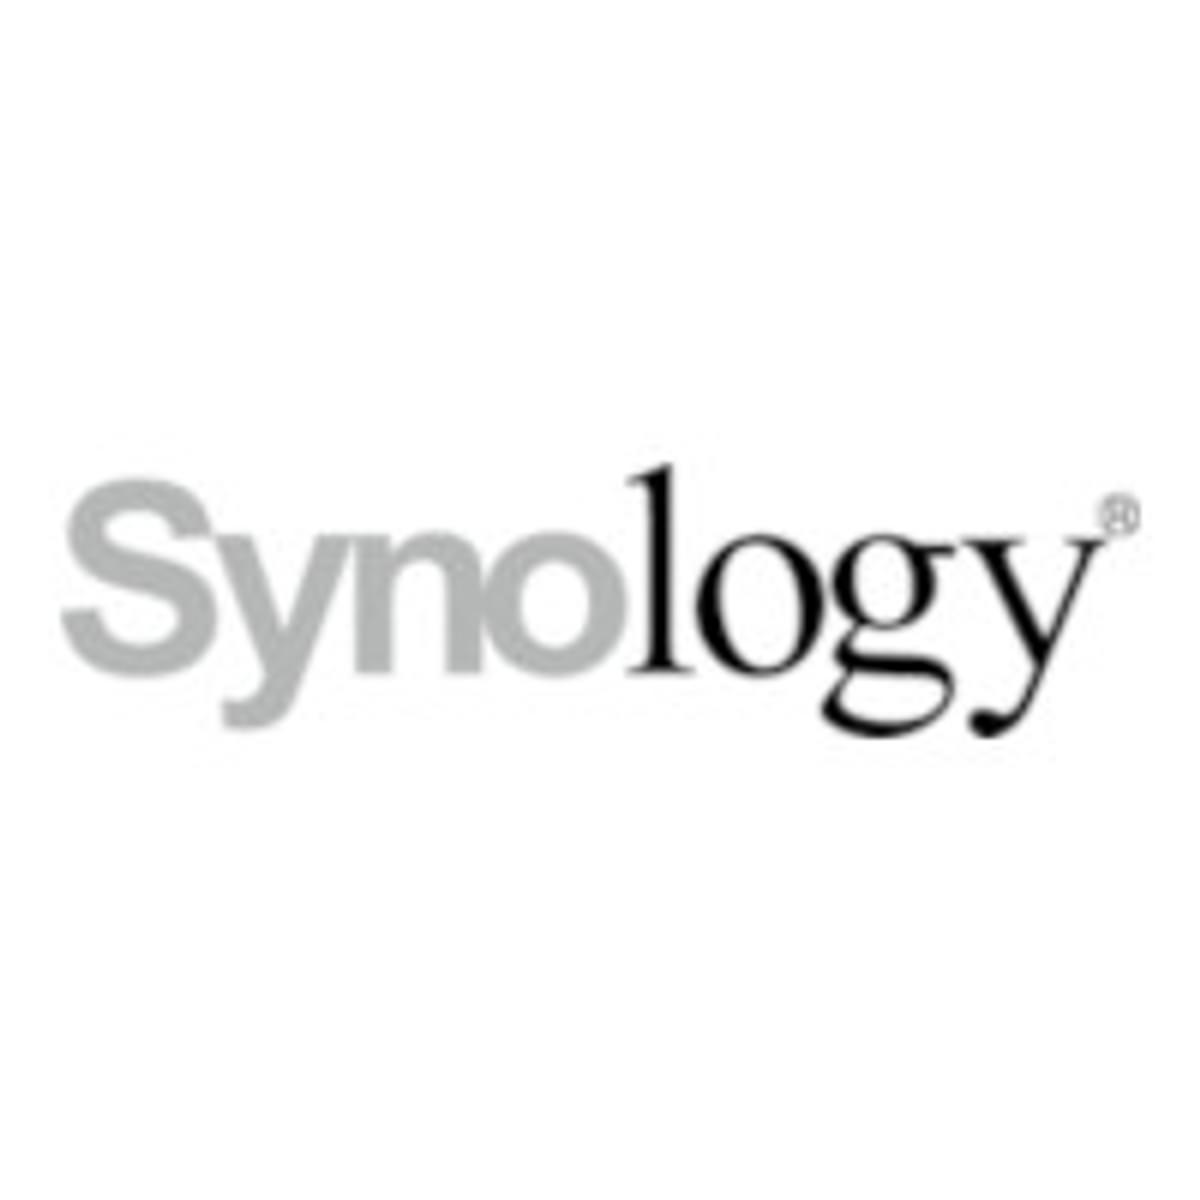 Synology lanceert DSM 7.0 en breidt C2-cloud uit image